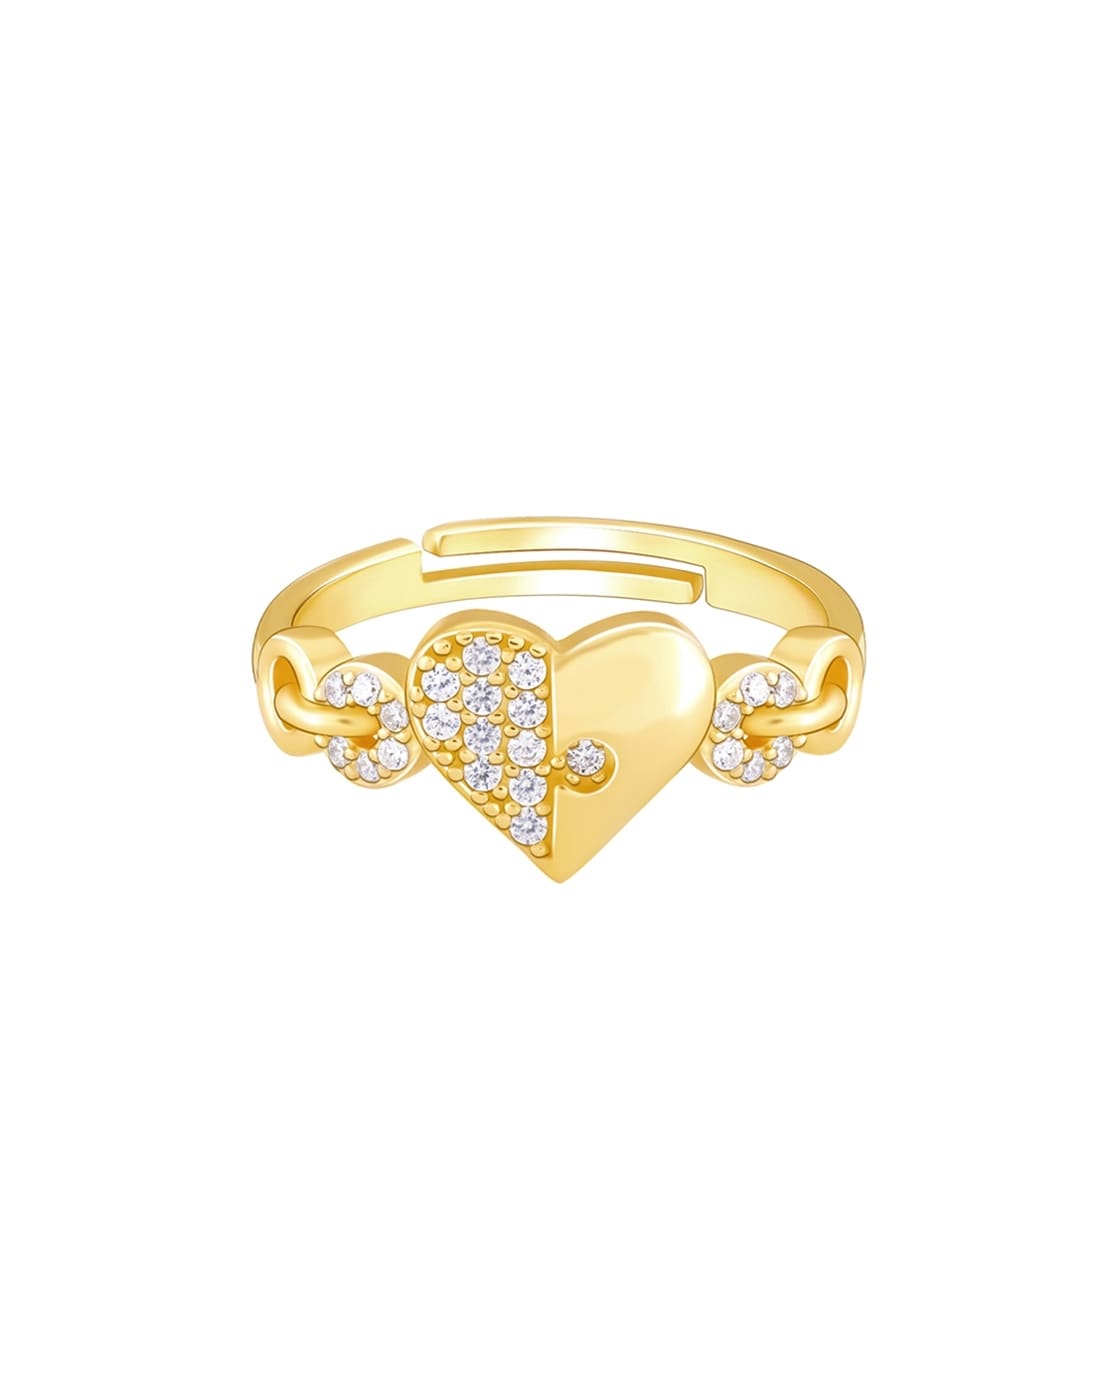 Name Rings Designs | Gold Rings Design 2022 #Jewellery #Rings - YouTube